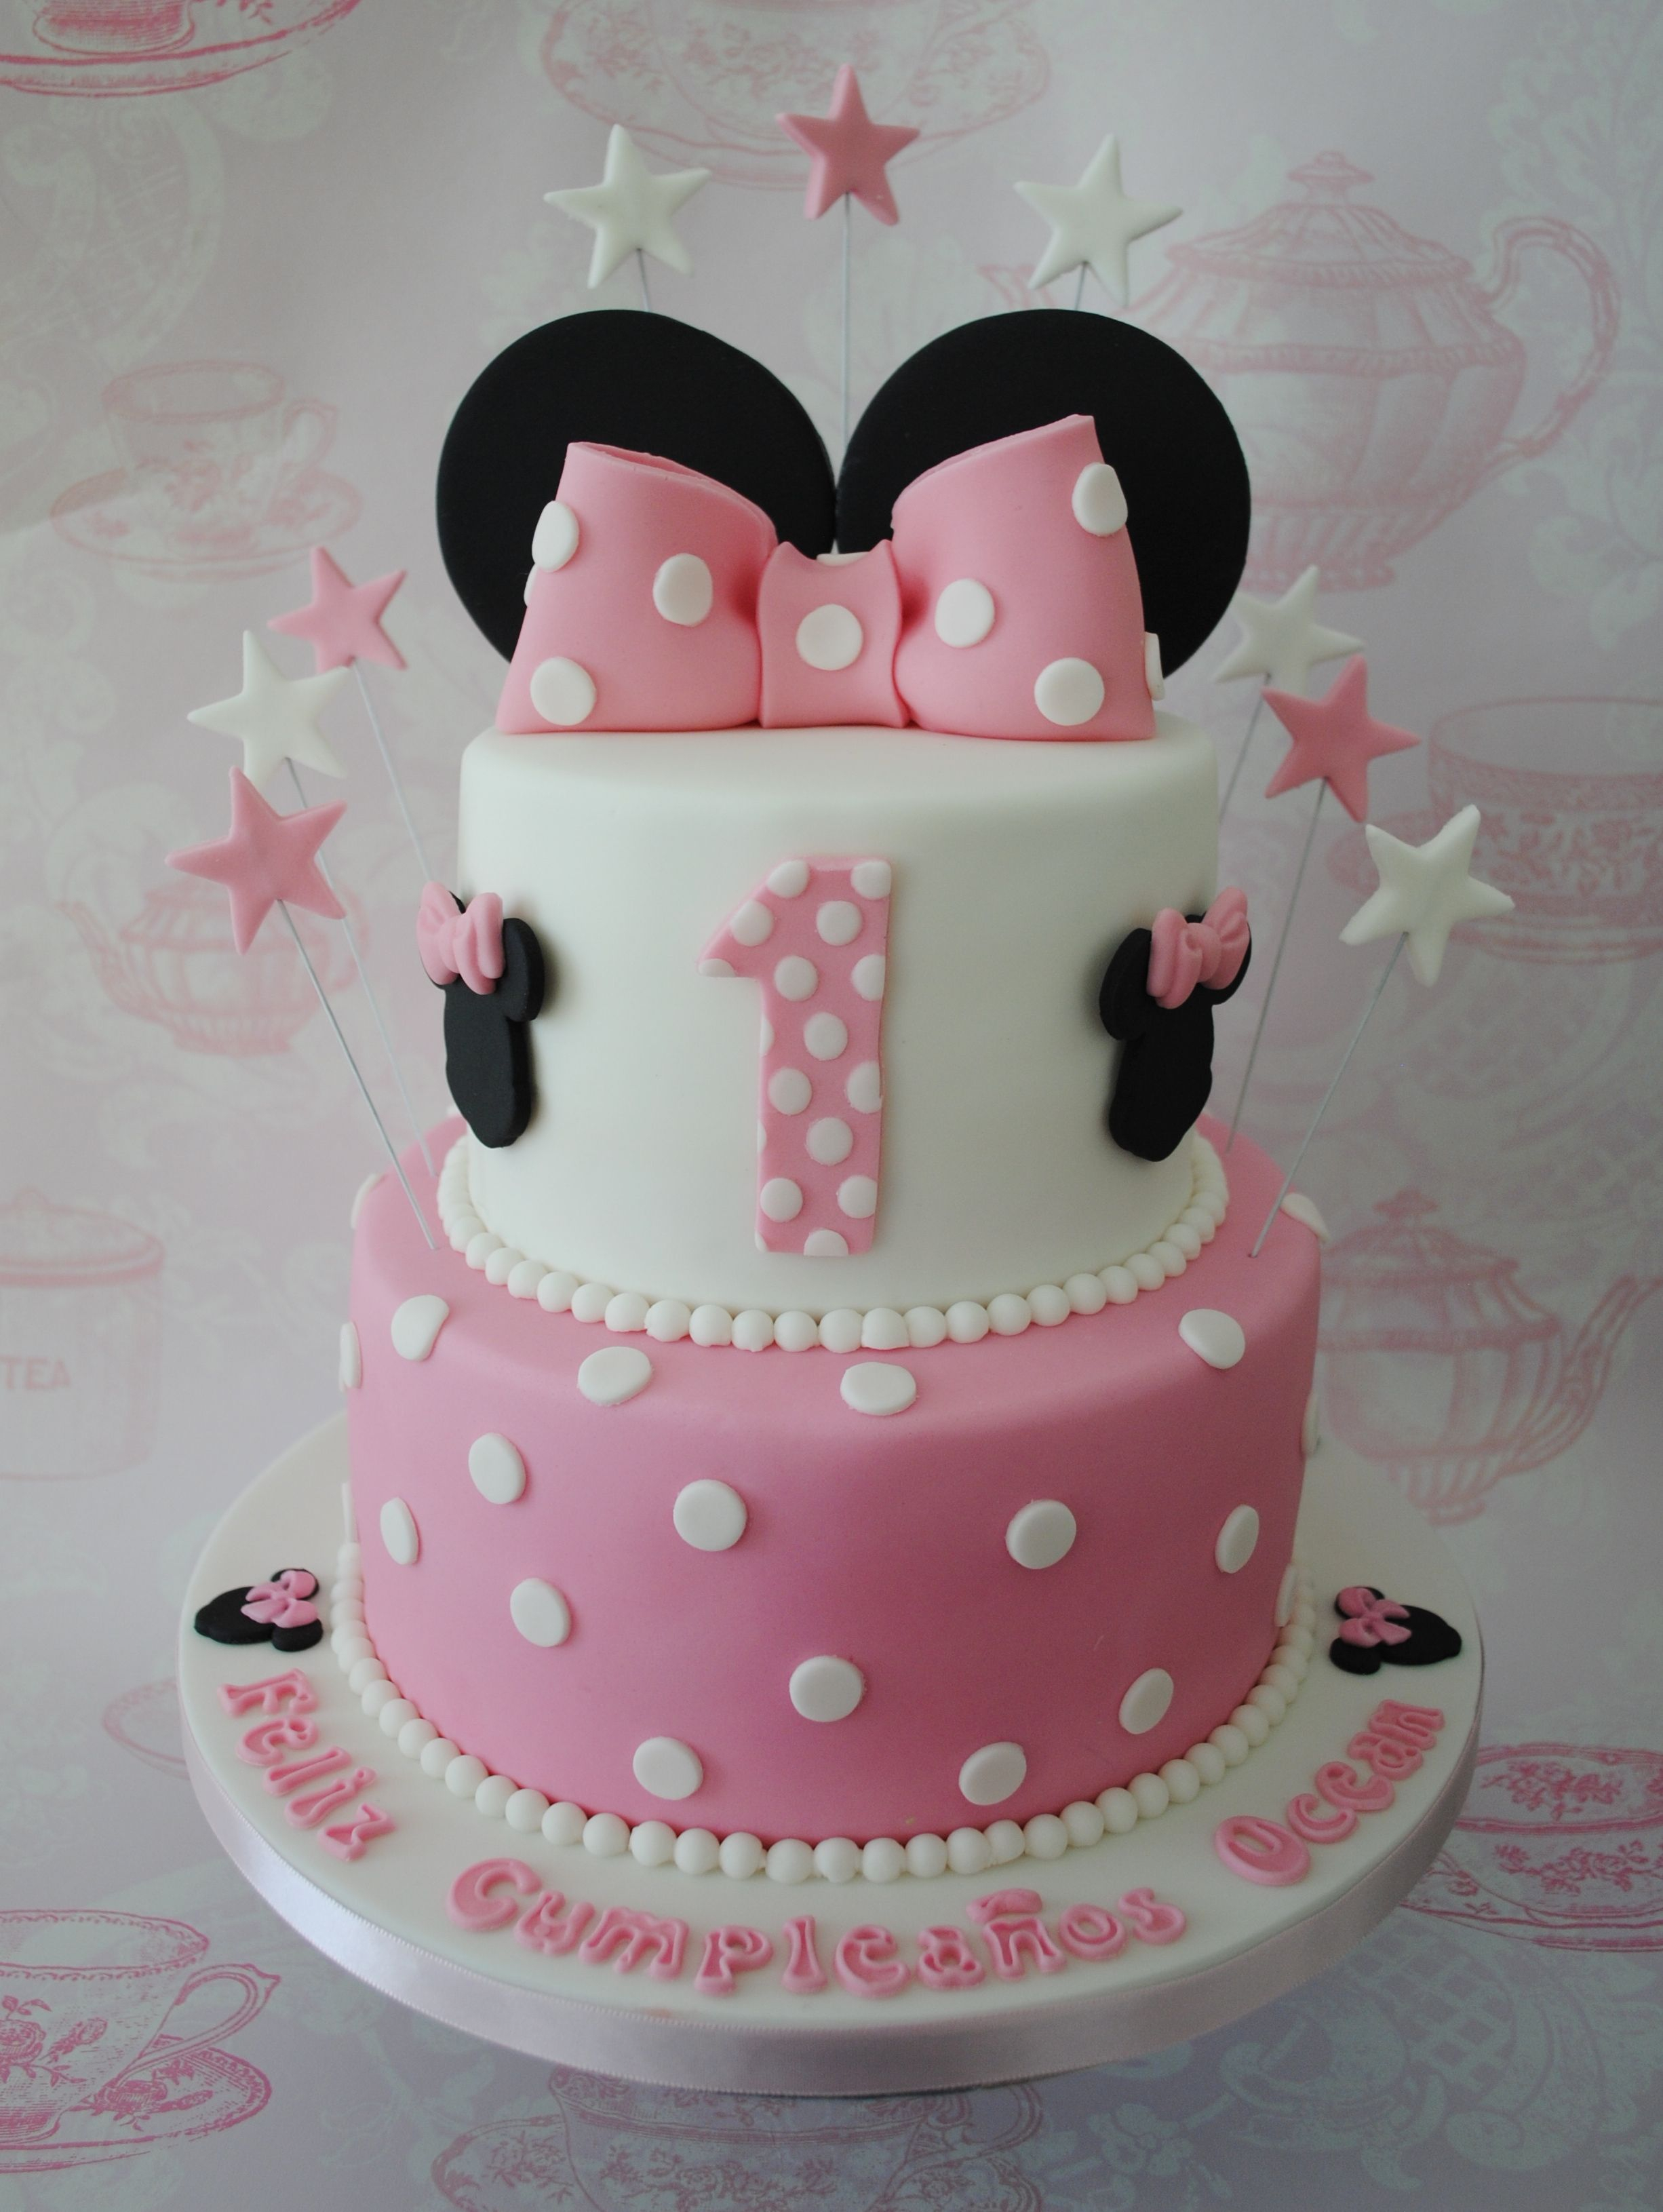 Minnie Mouse Birthday Cakes 2 Tiered Minnie Mouse Birthday Cake Miny Pinterest Minnie